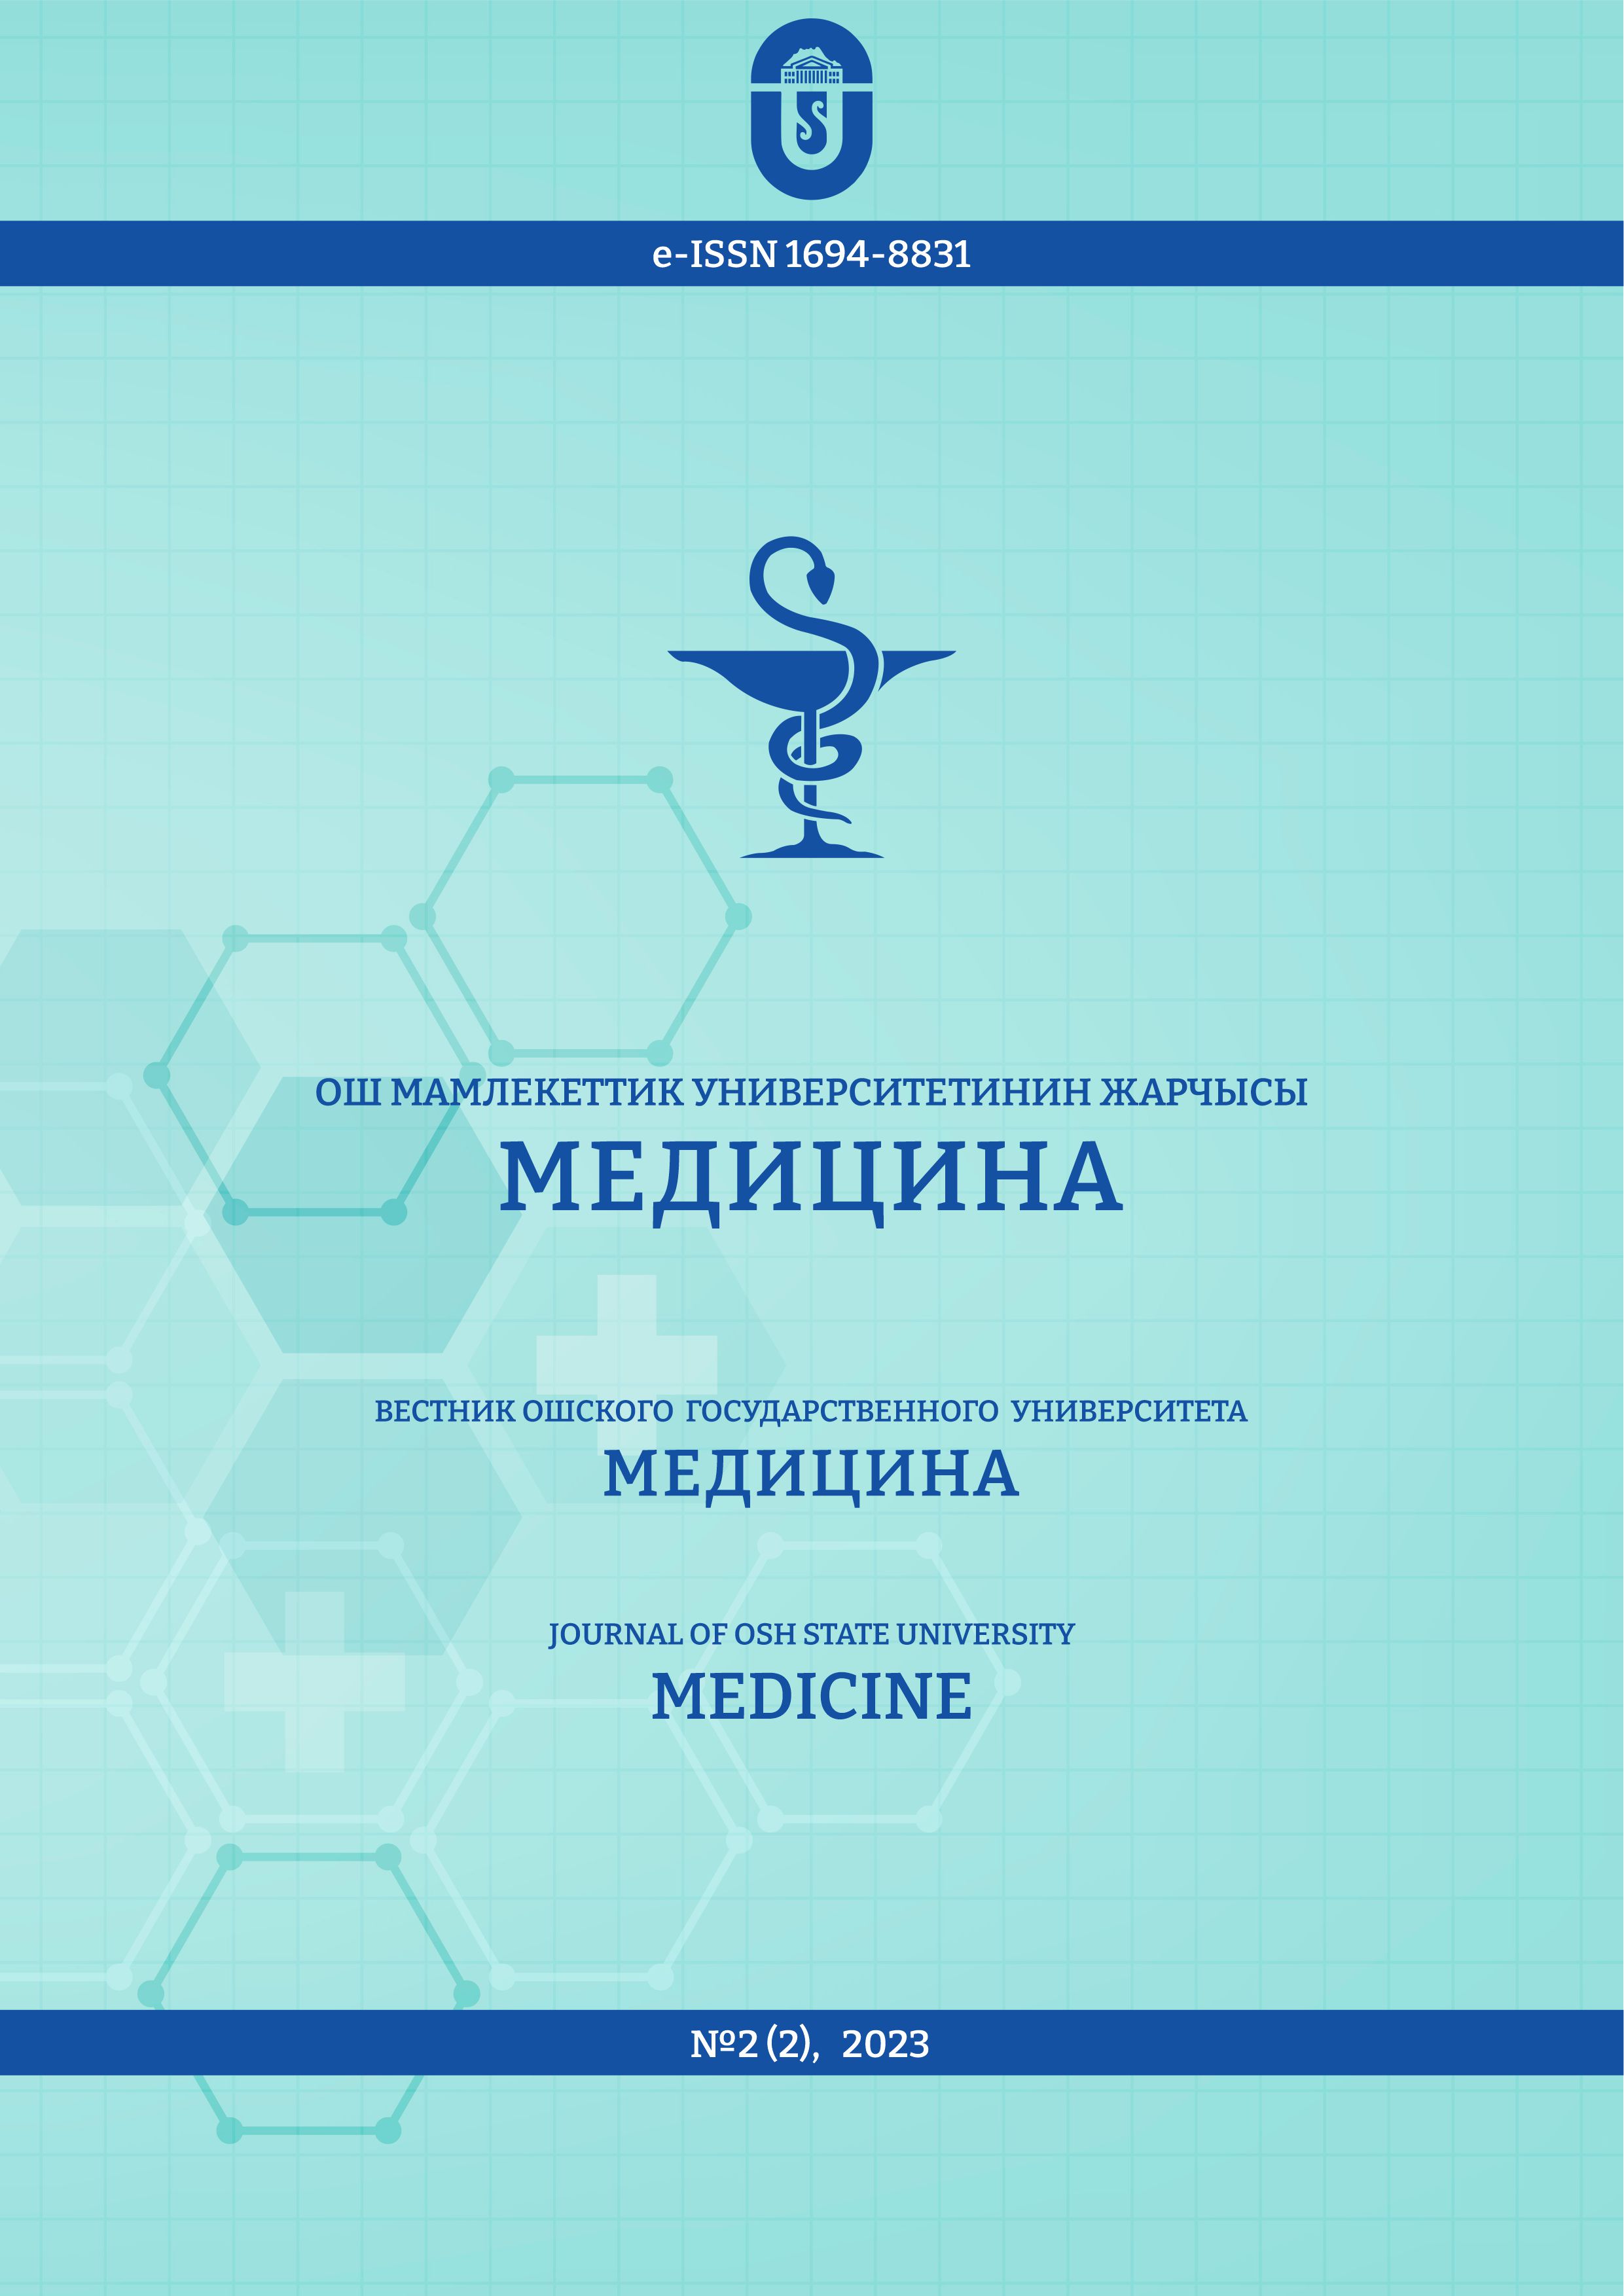 					View No. 2(2) (2023): Journal of Osh State University. Medicine
				